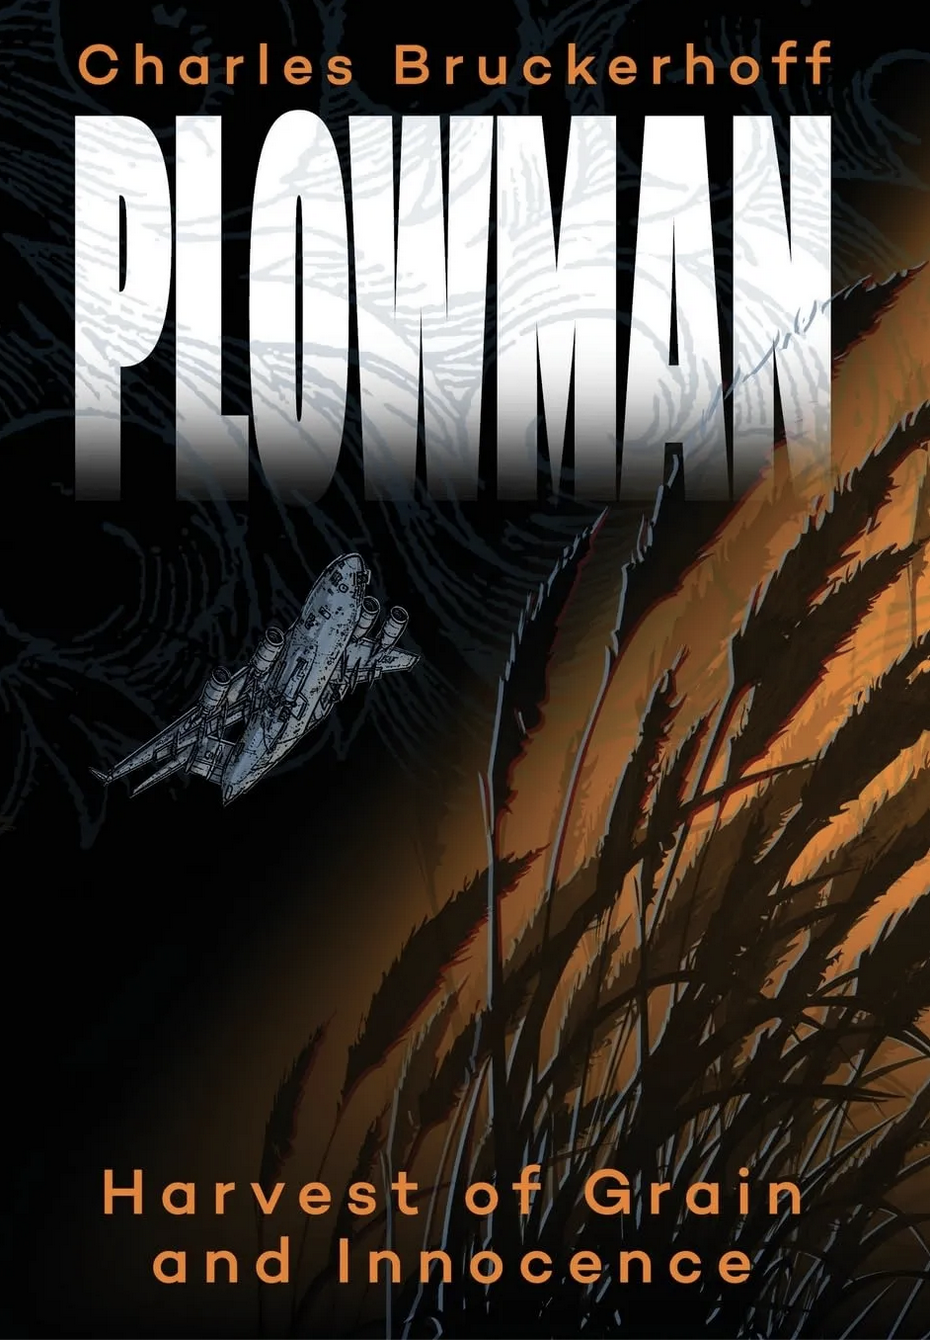 Plowman by Charles Bruckerhoff